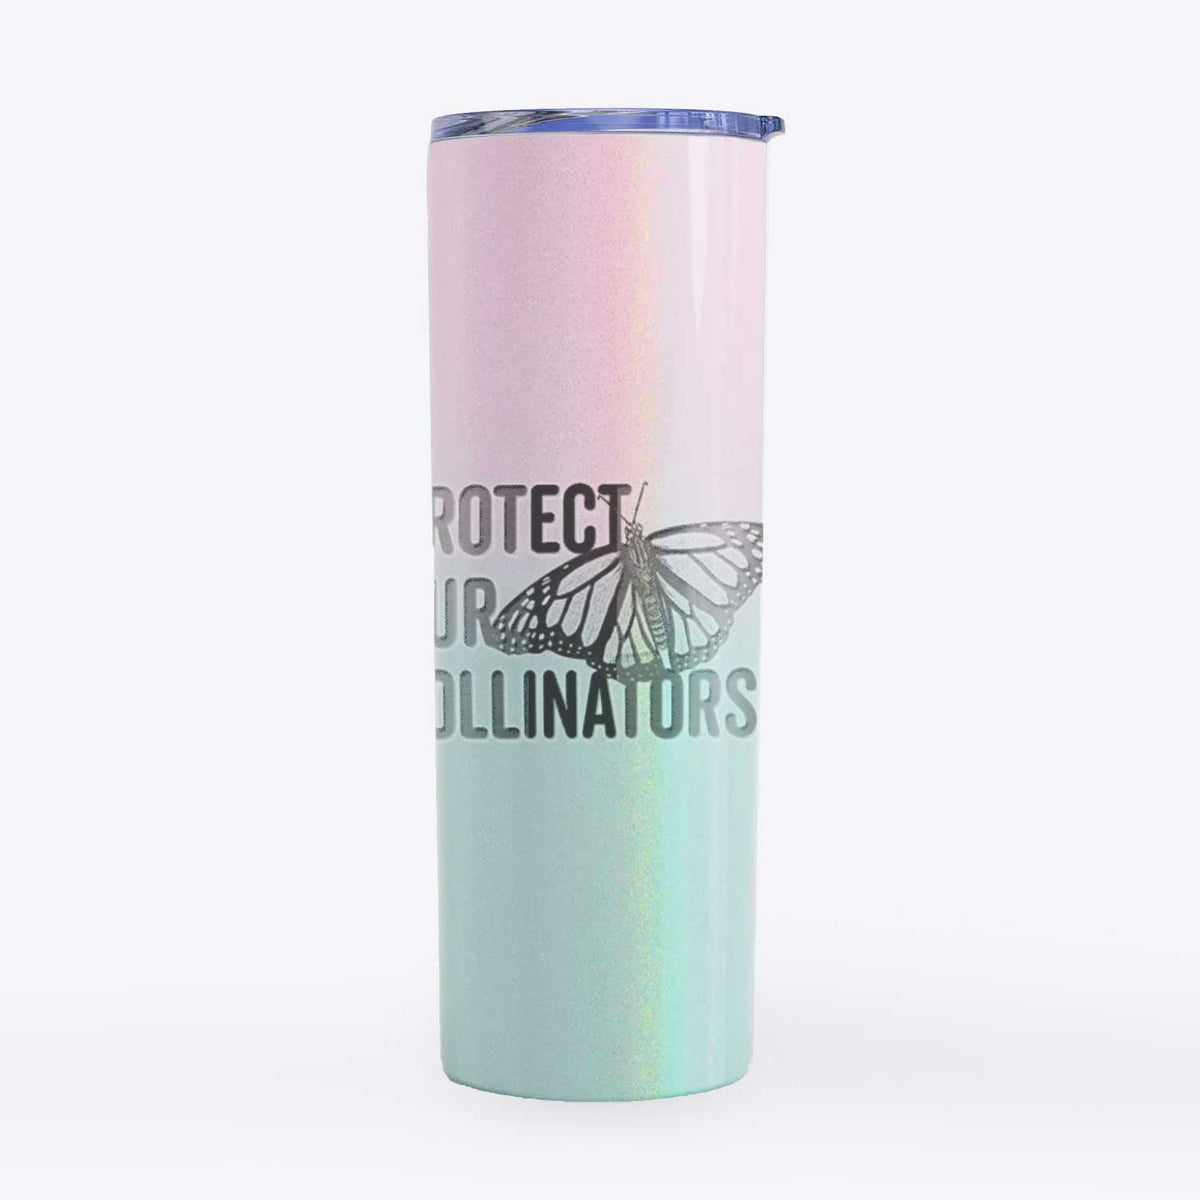 Protect our Pollinators - 20oz Skinny Tumbler